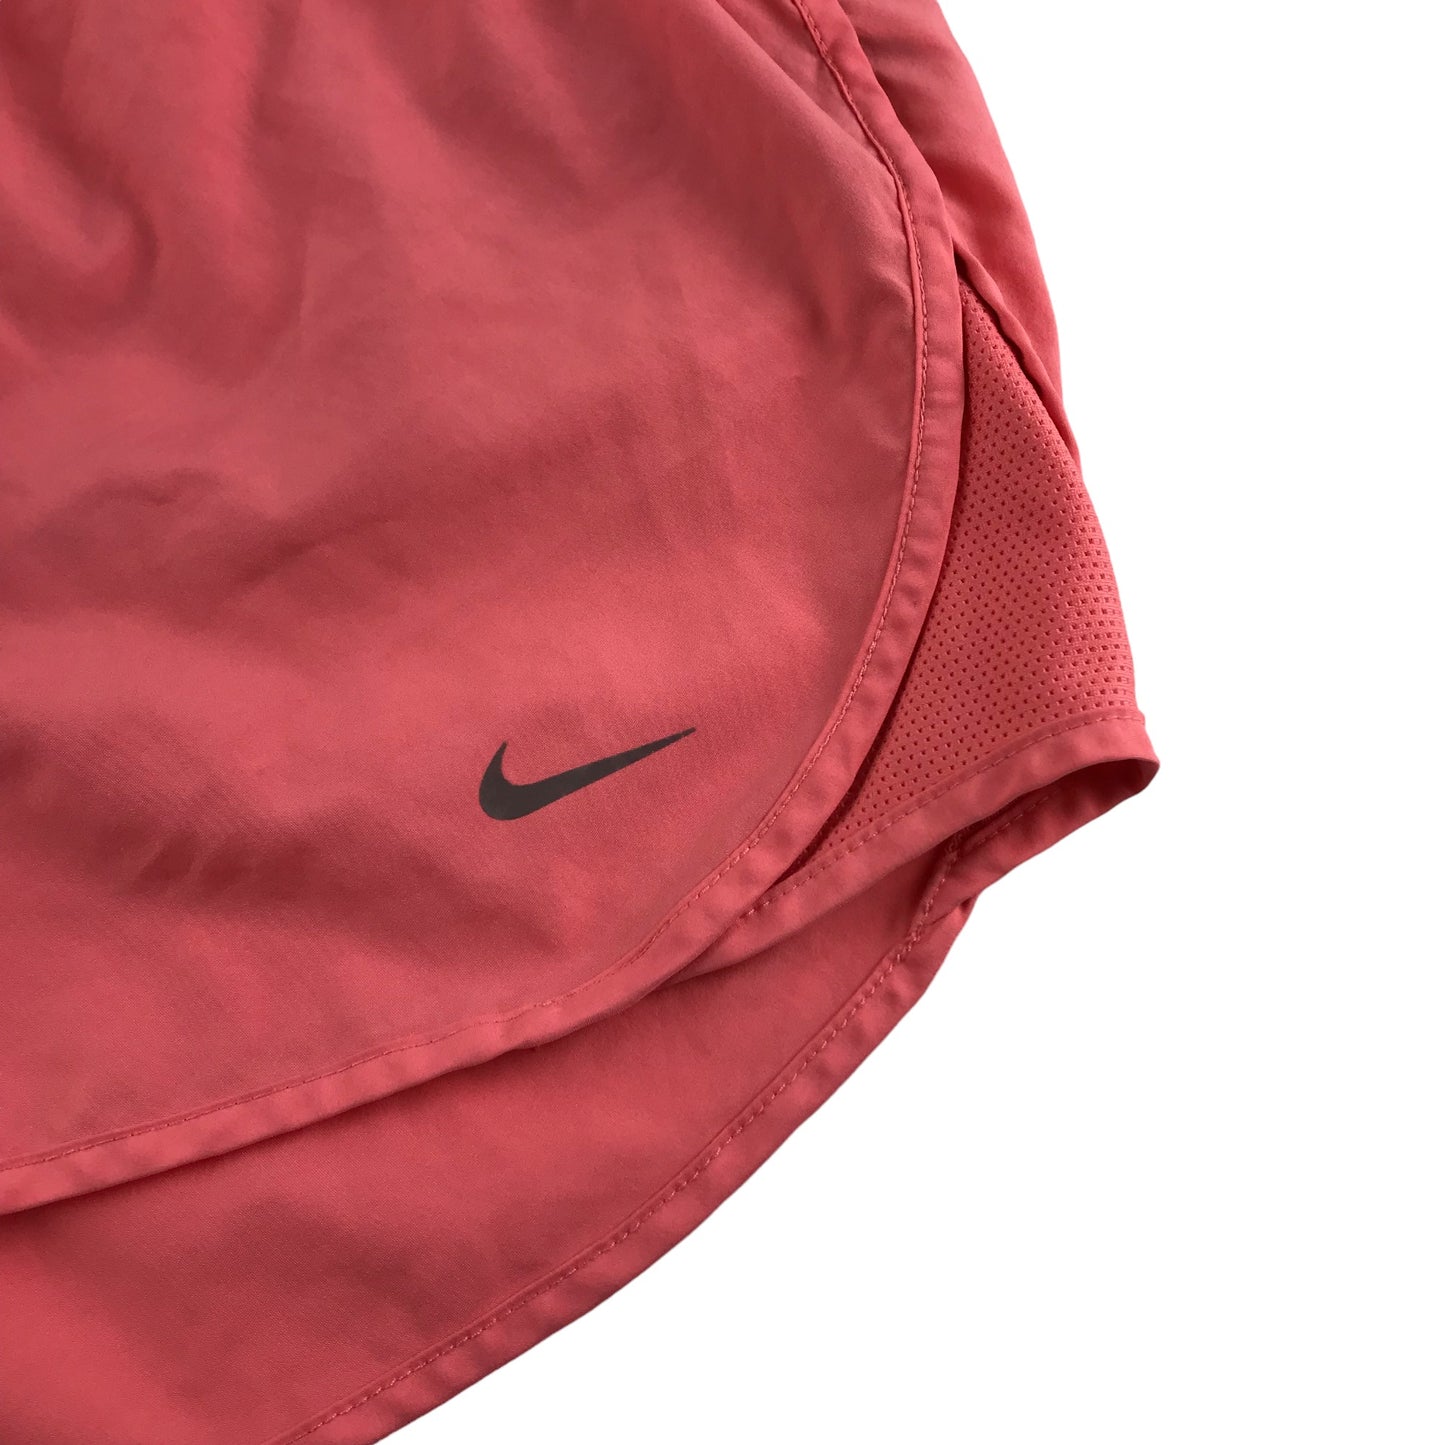 Nike Sport Shorts Adult Size Medium Peachy Pink Dri-Fit